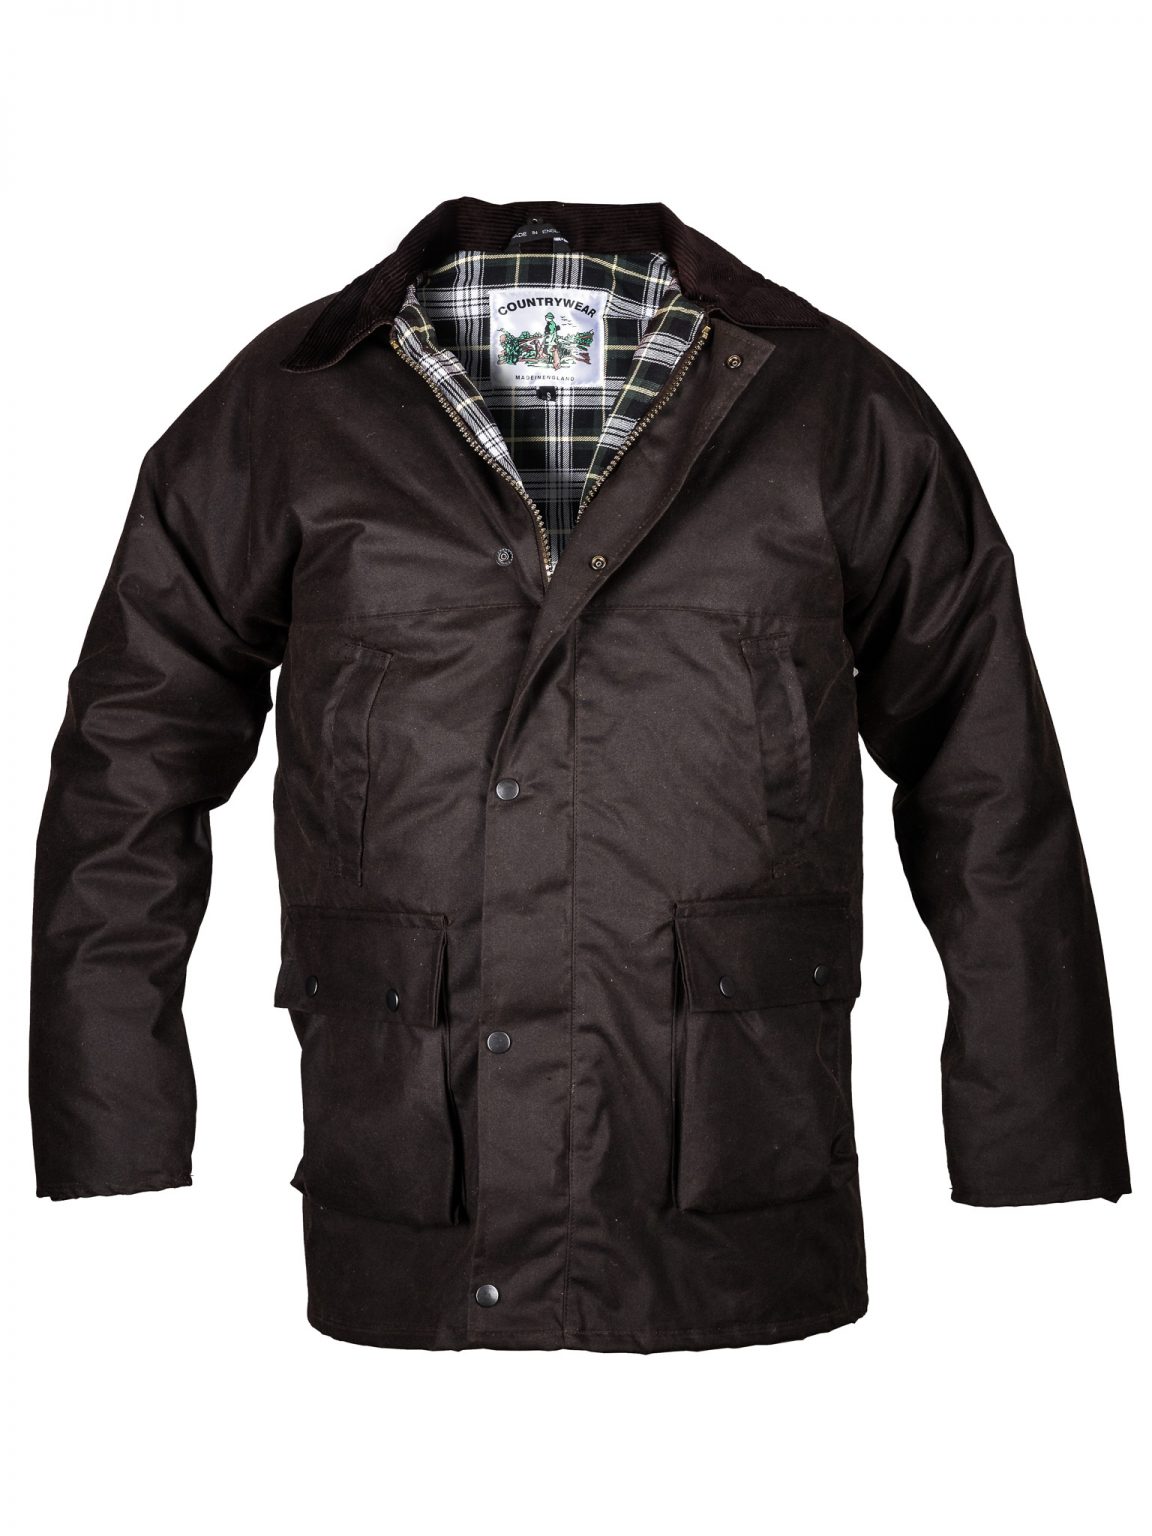 EdinburghOutdoorWear Countrywear Wax Jacket Brown - Edinburgh Outdoor Wear